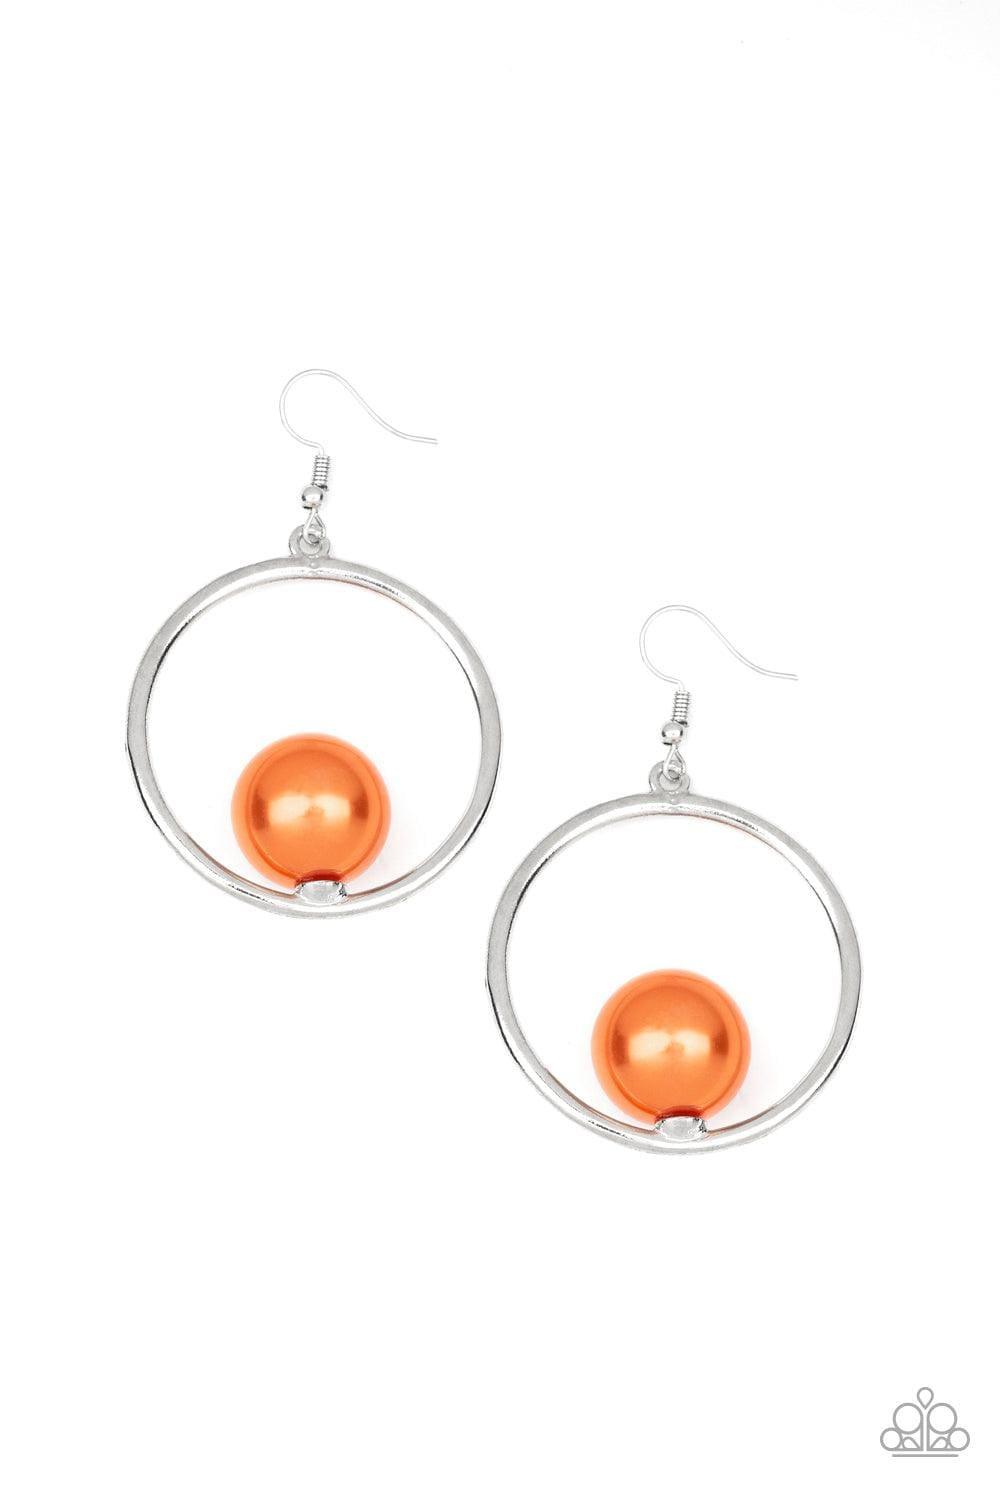 Paparazzi Accessories - Solitaire Refinement - Orange Earrings - Bling by JessieK